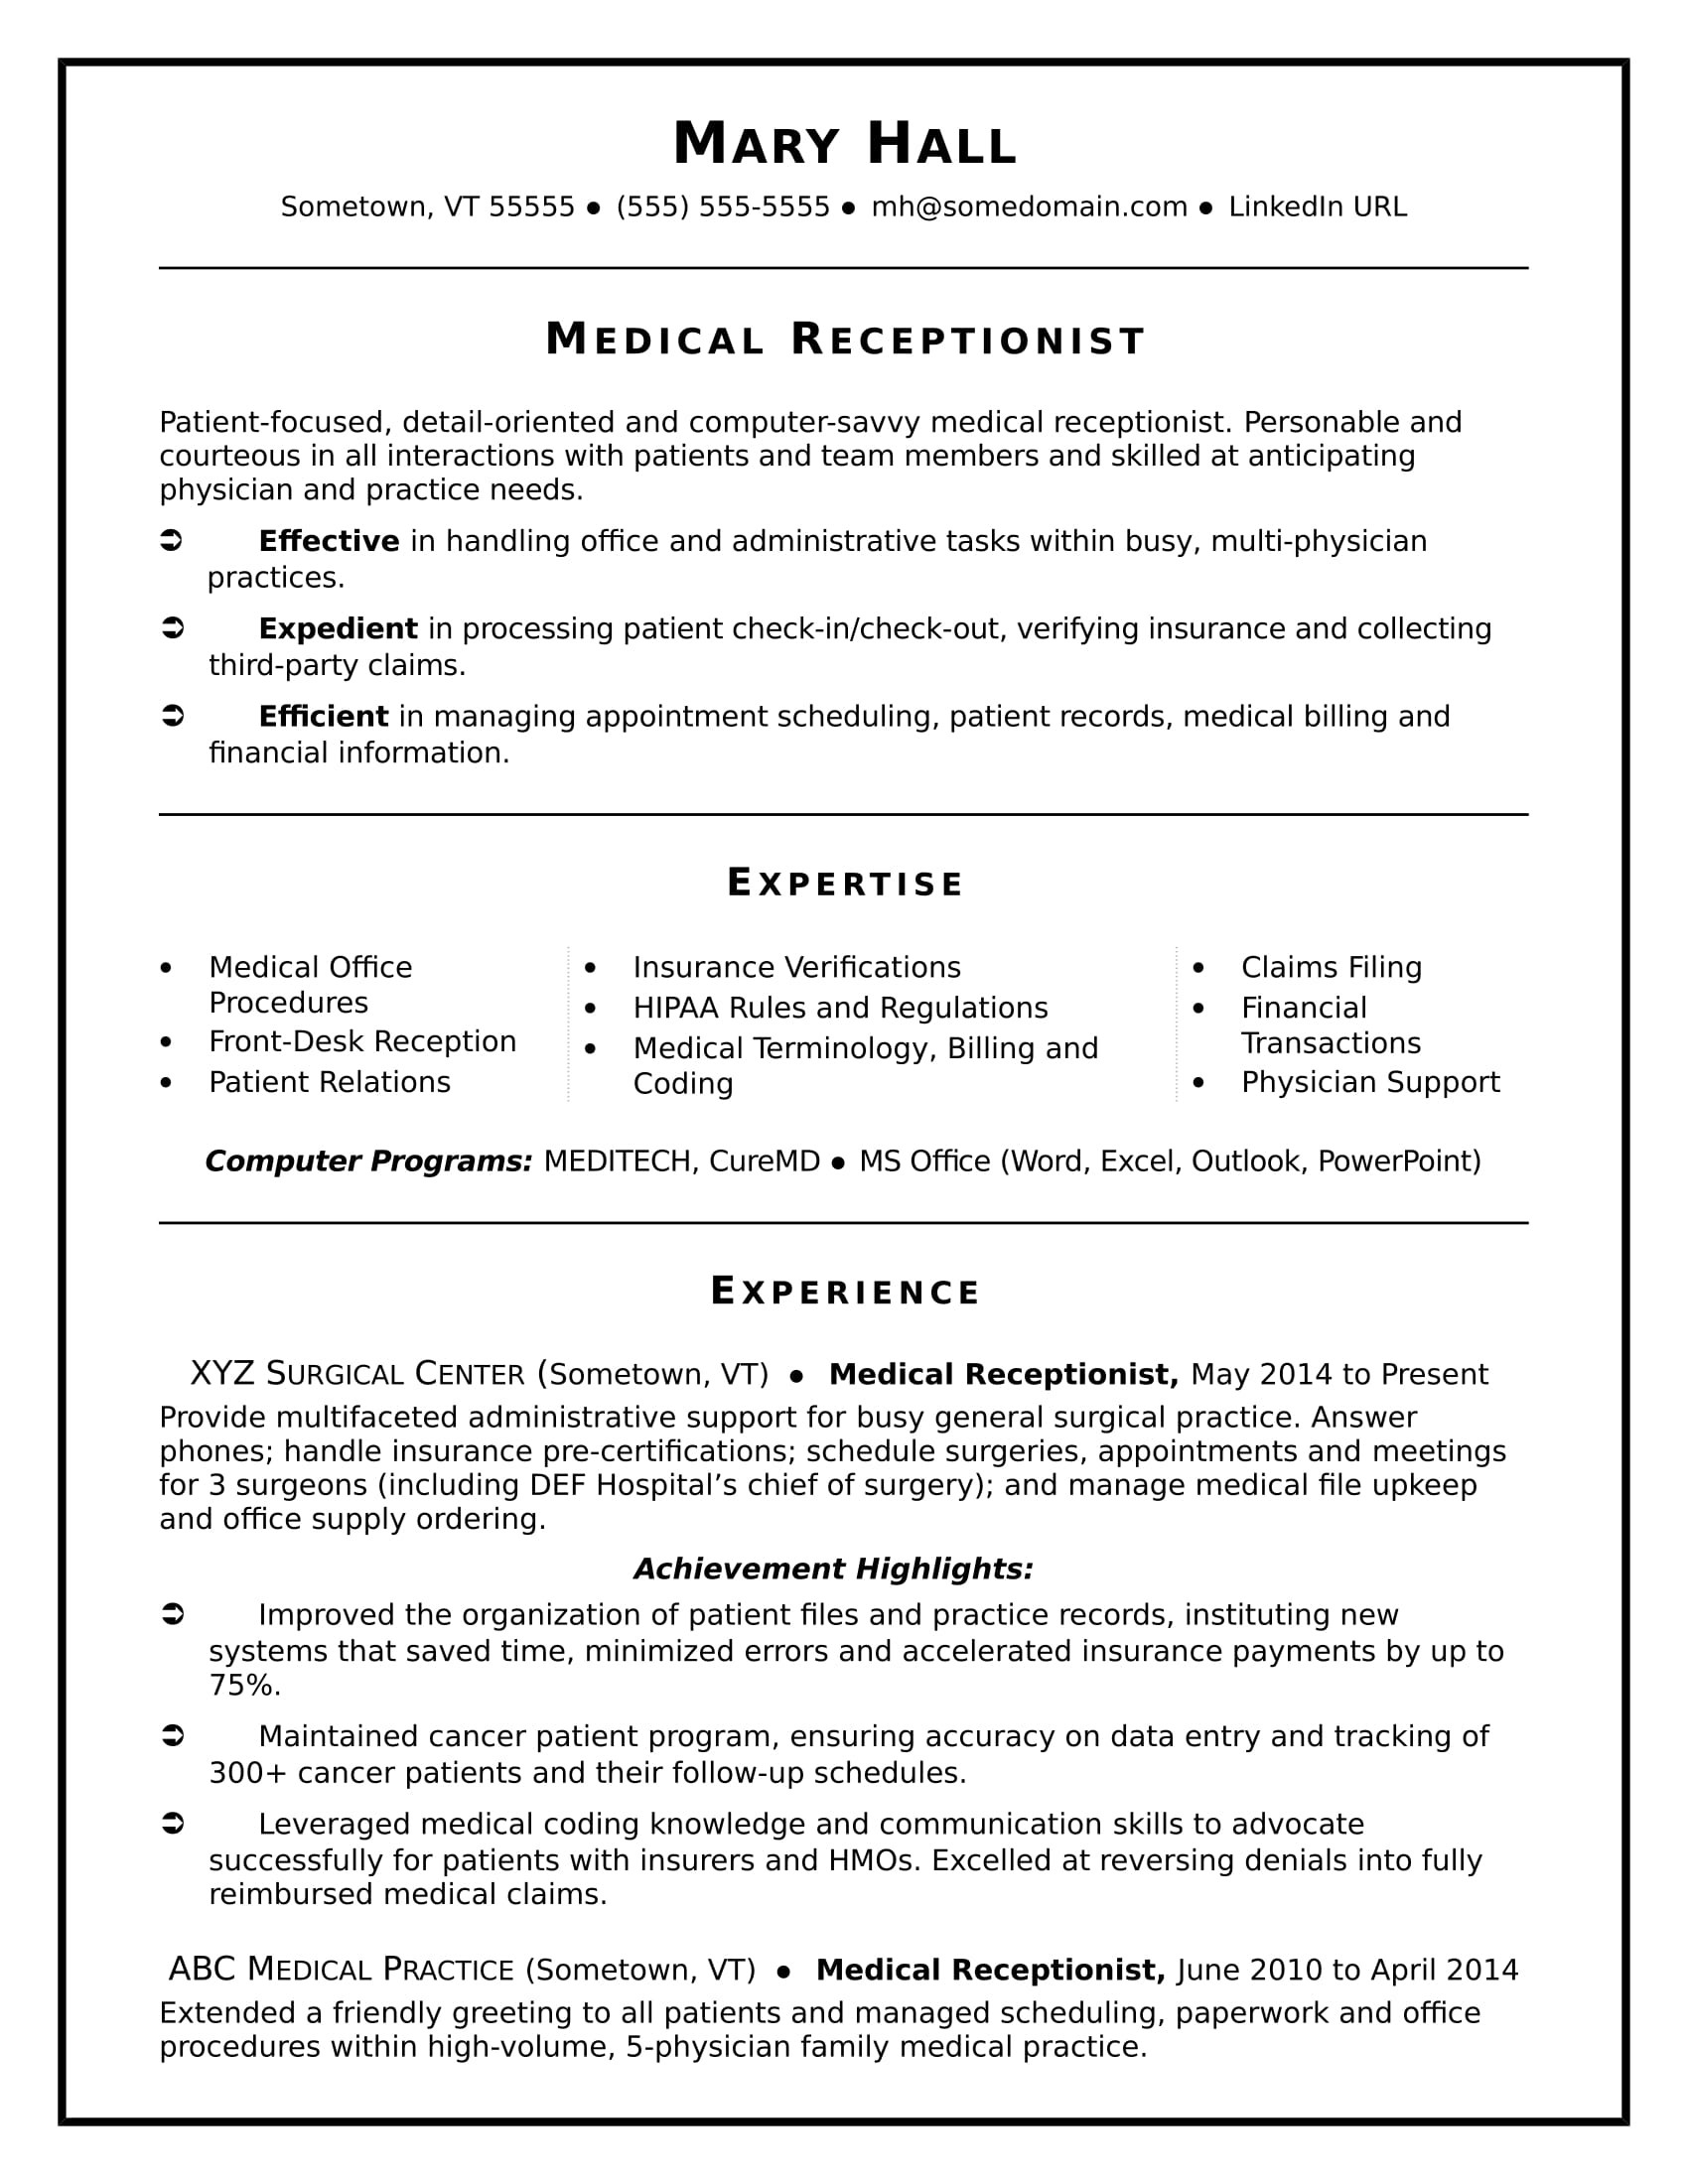 Sample Resume Objectives for Medical Receptionist Medical Receptionist Resume Sample Monster.com